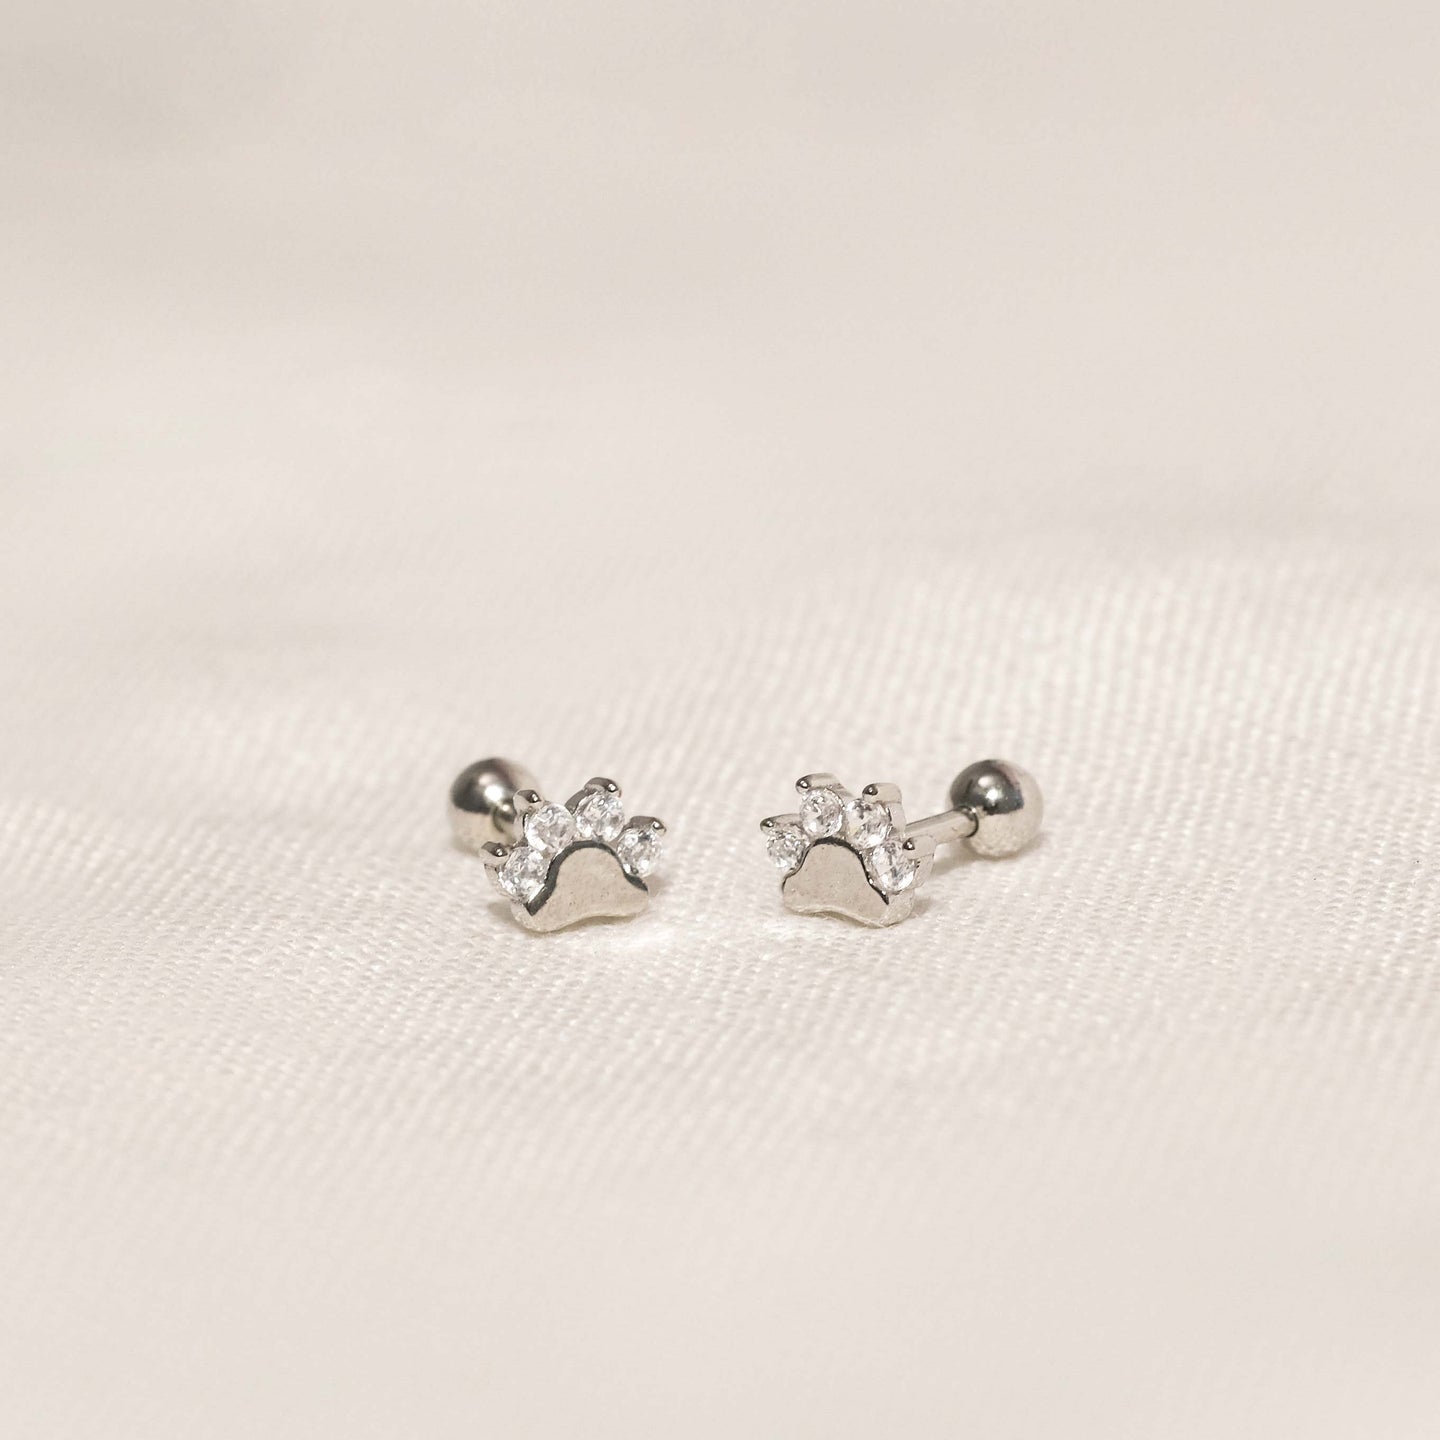 products/pup-cz-stud-earrings-925-sterling-silver-1.jpg